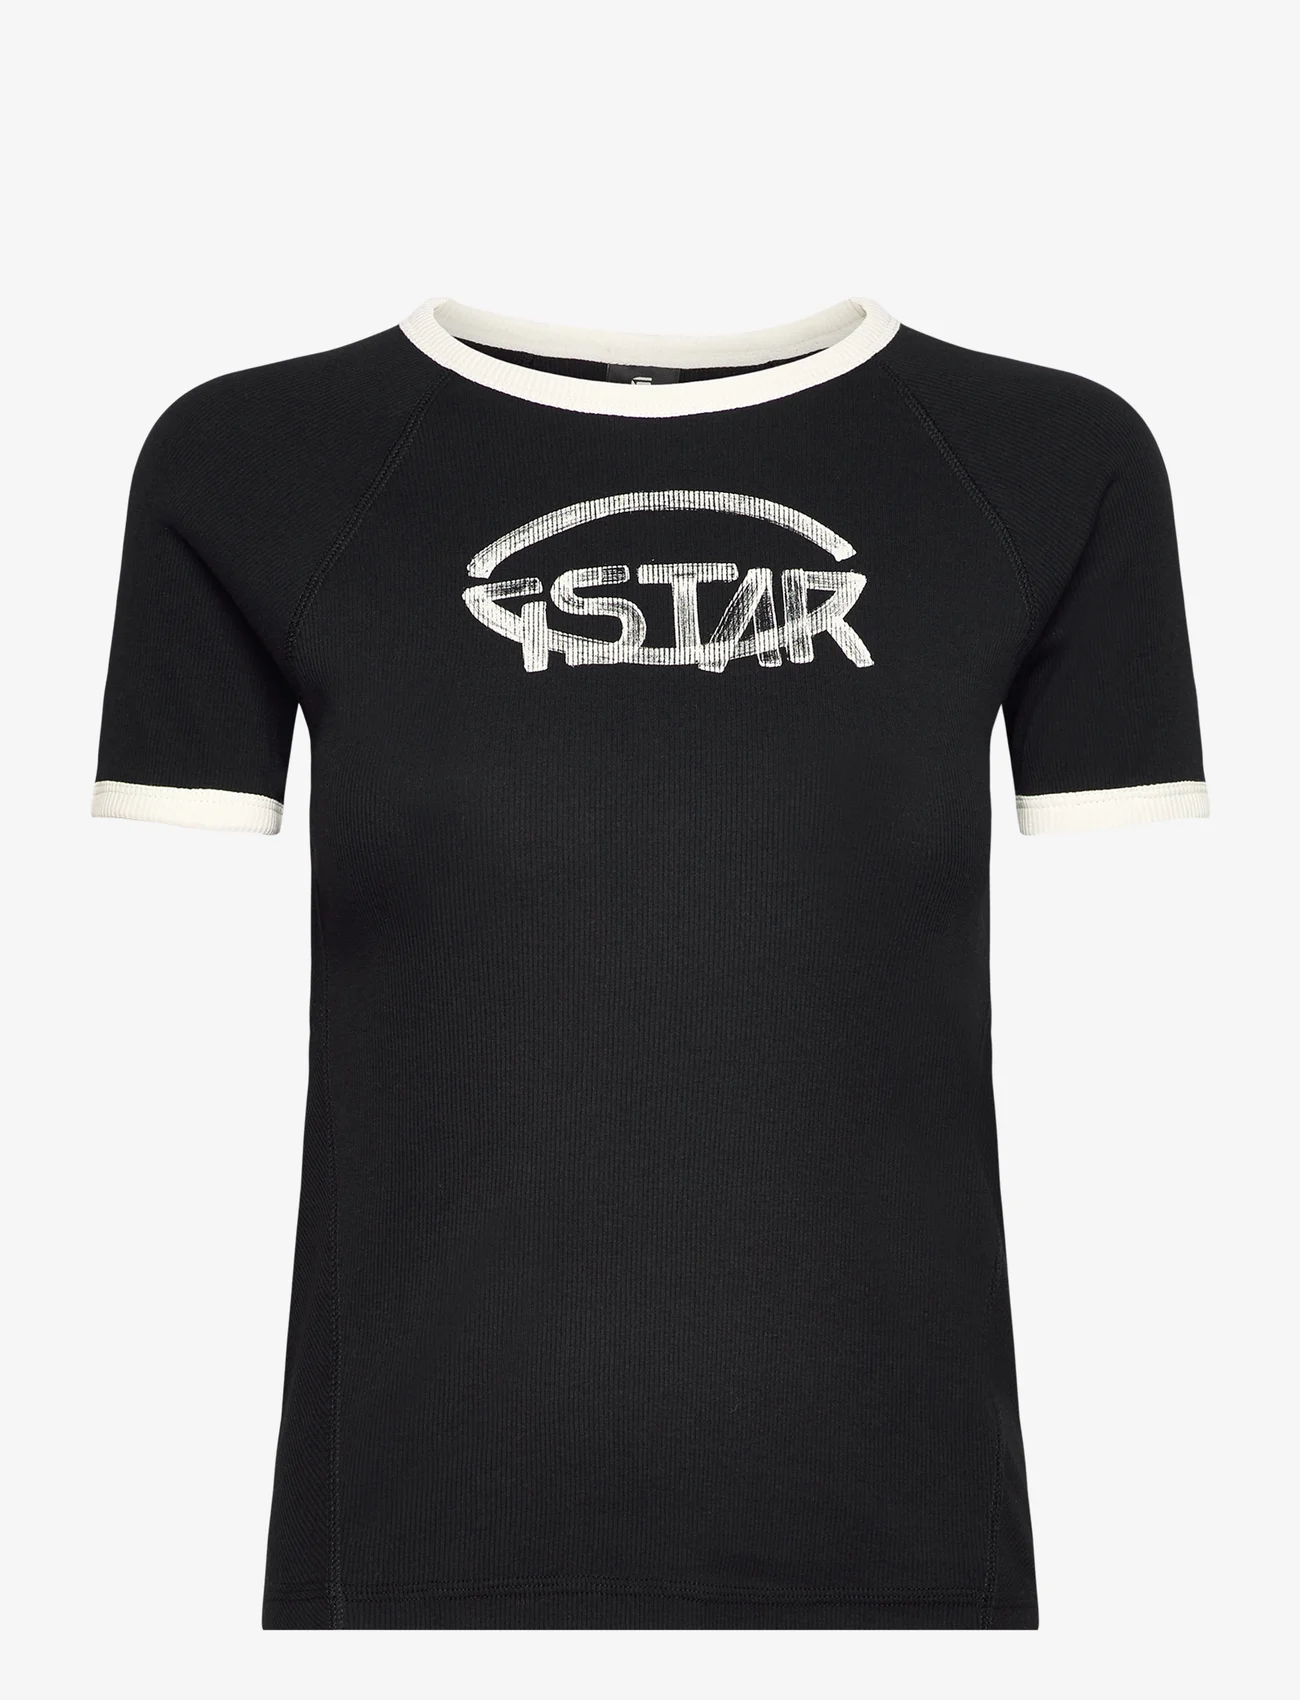 G-Star RAW - Army ringer slim r t wmn - t-shirts - dk black - 0